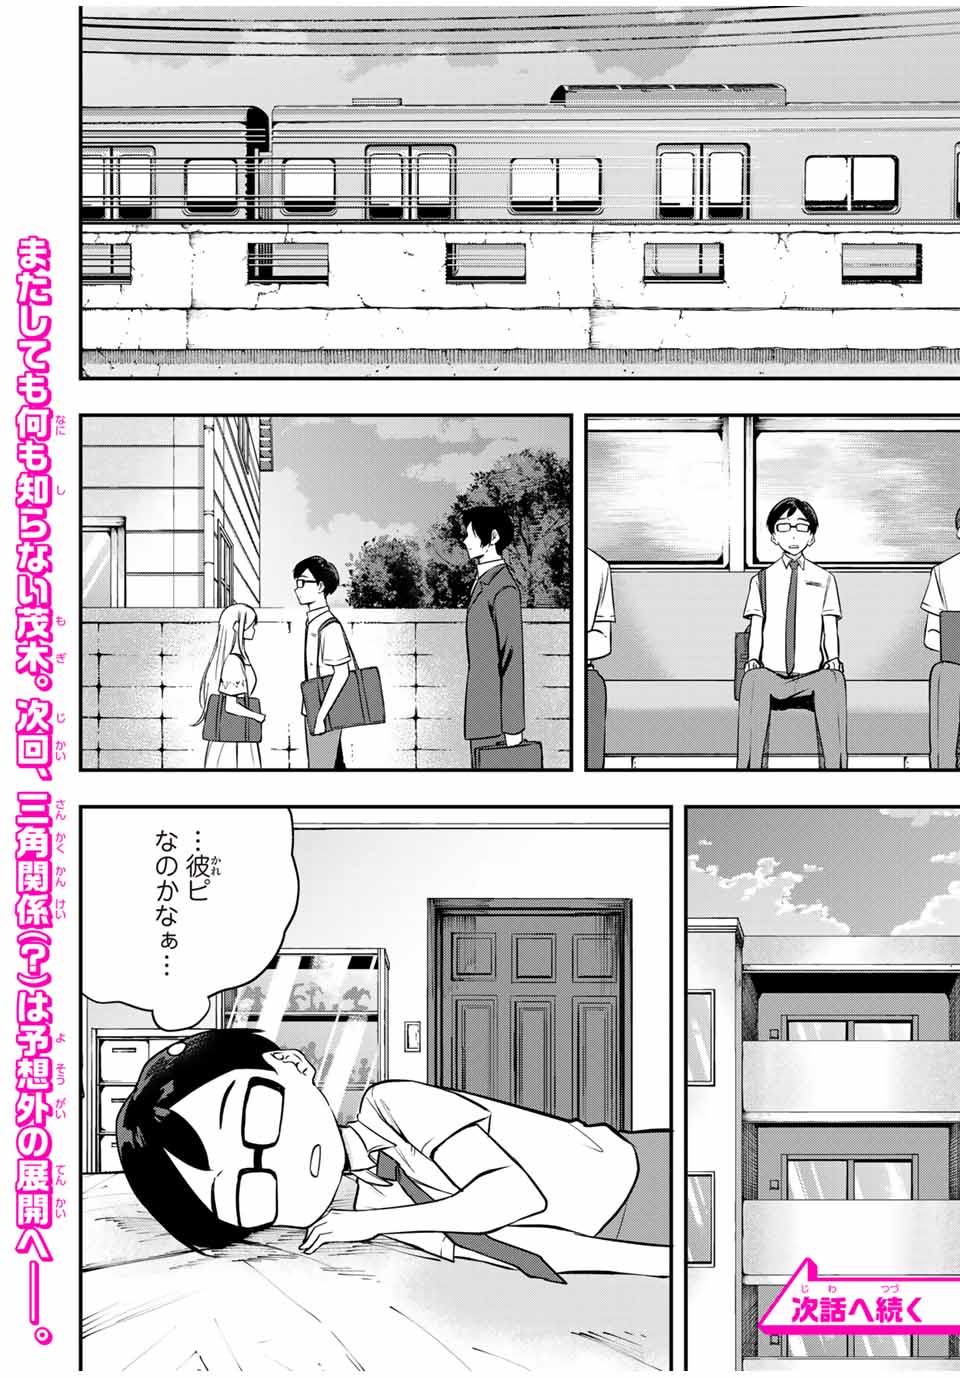 Heroine wa xx Okasegitai - Chapter 2 - Page 28